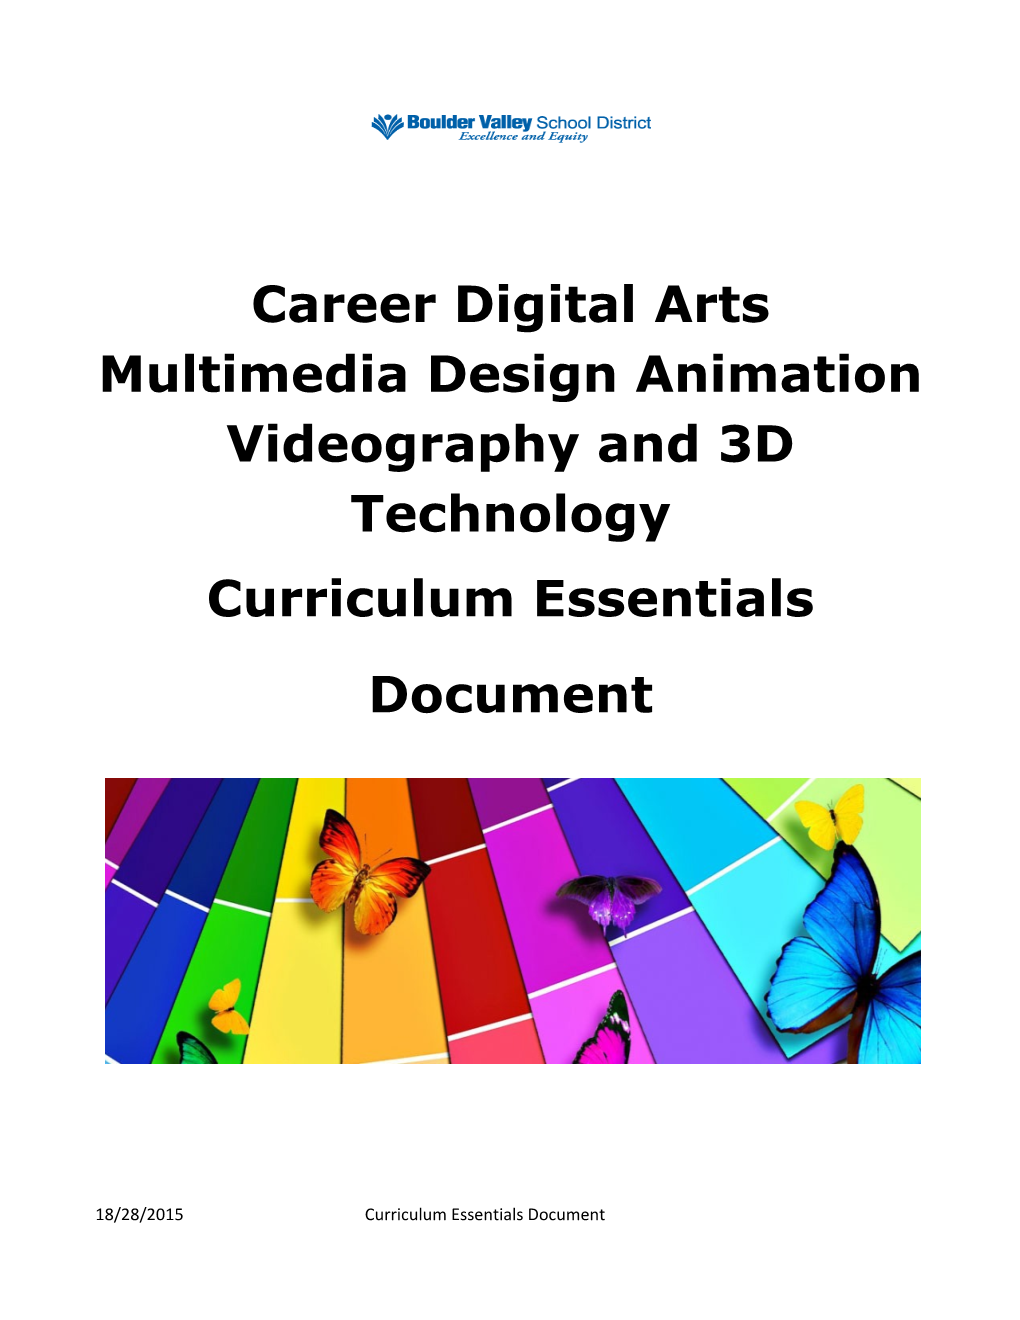 Multimedia 2D and 3D Design